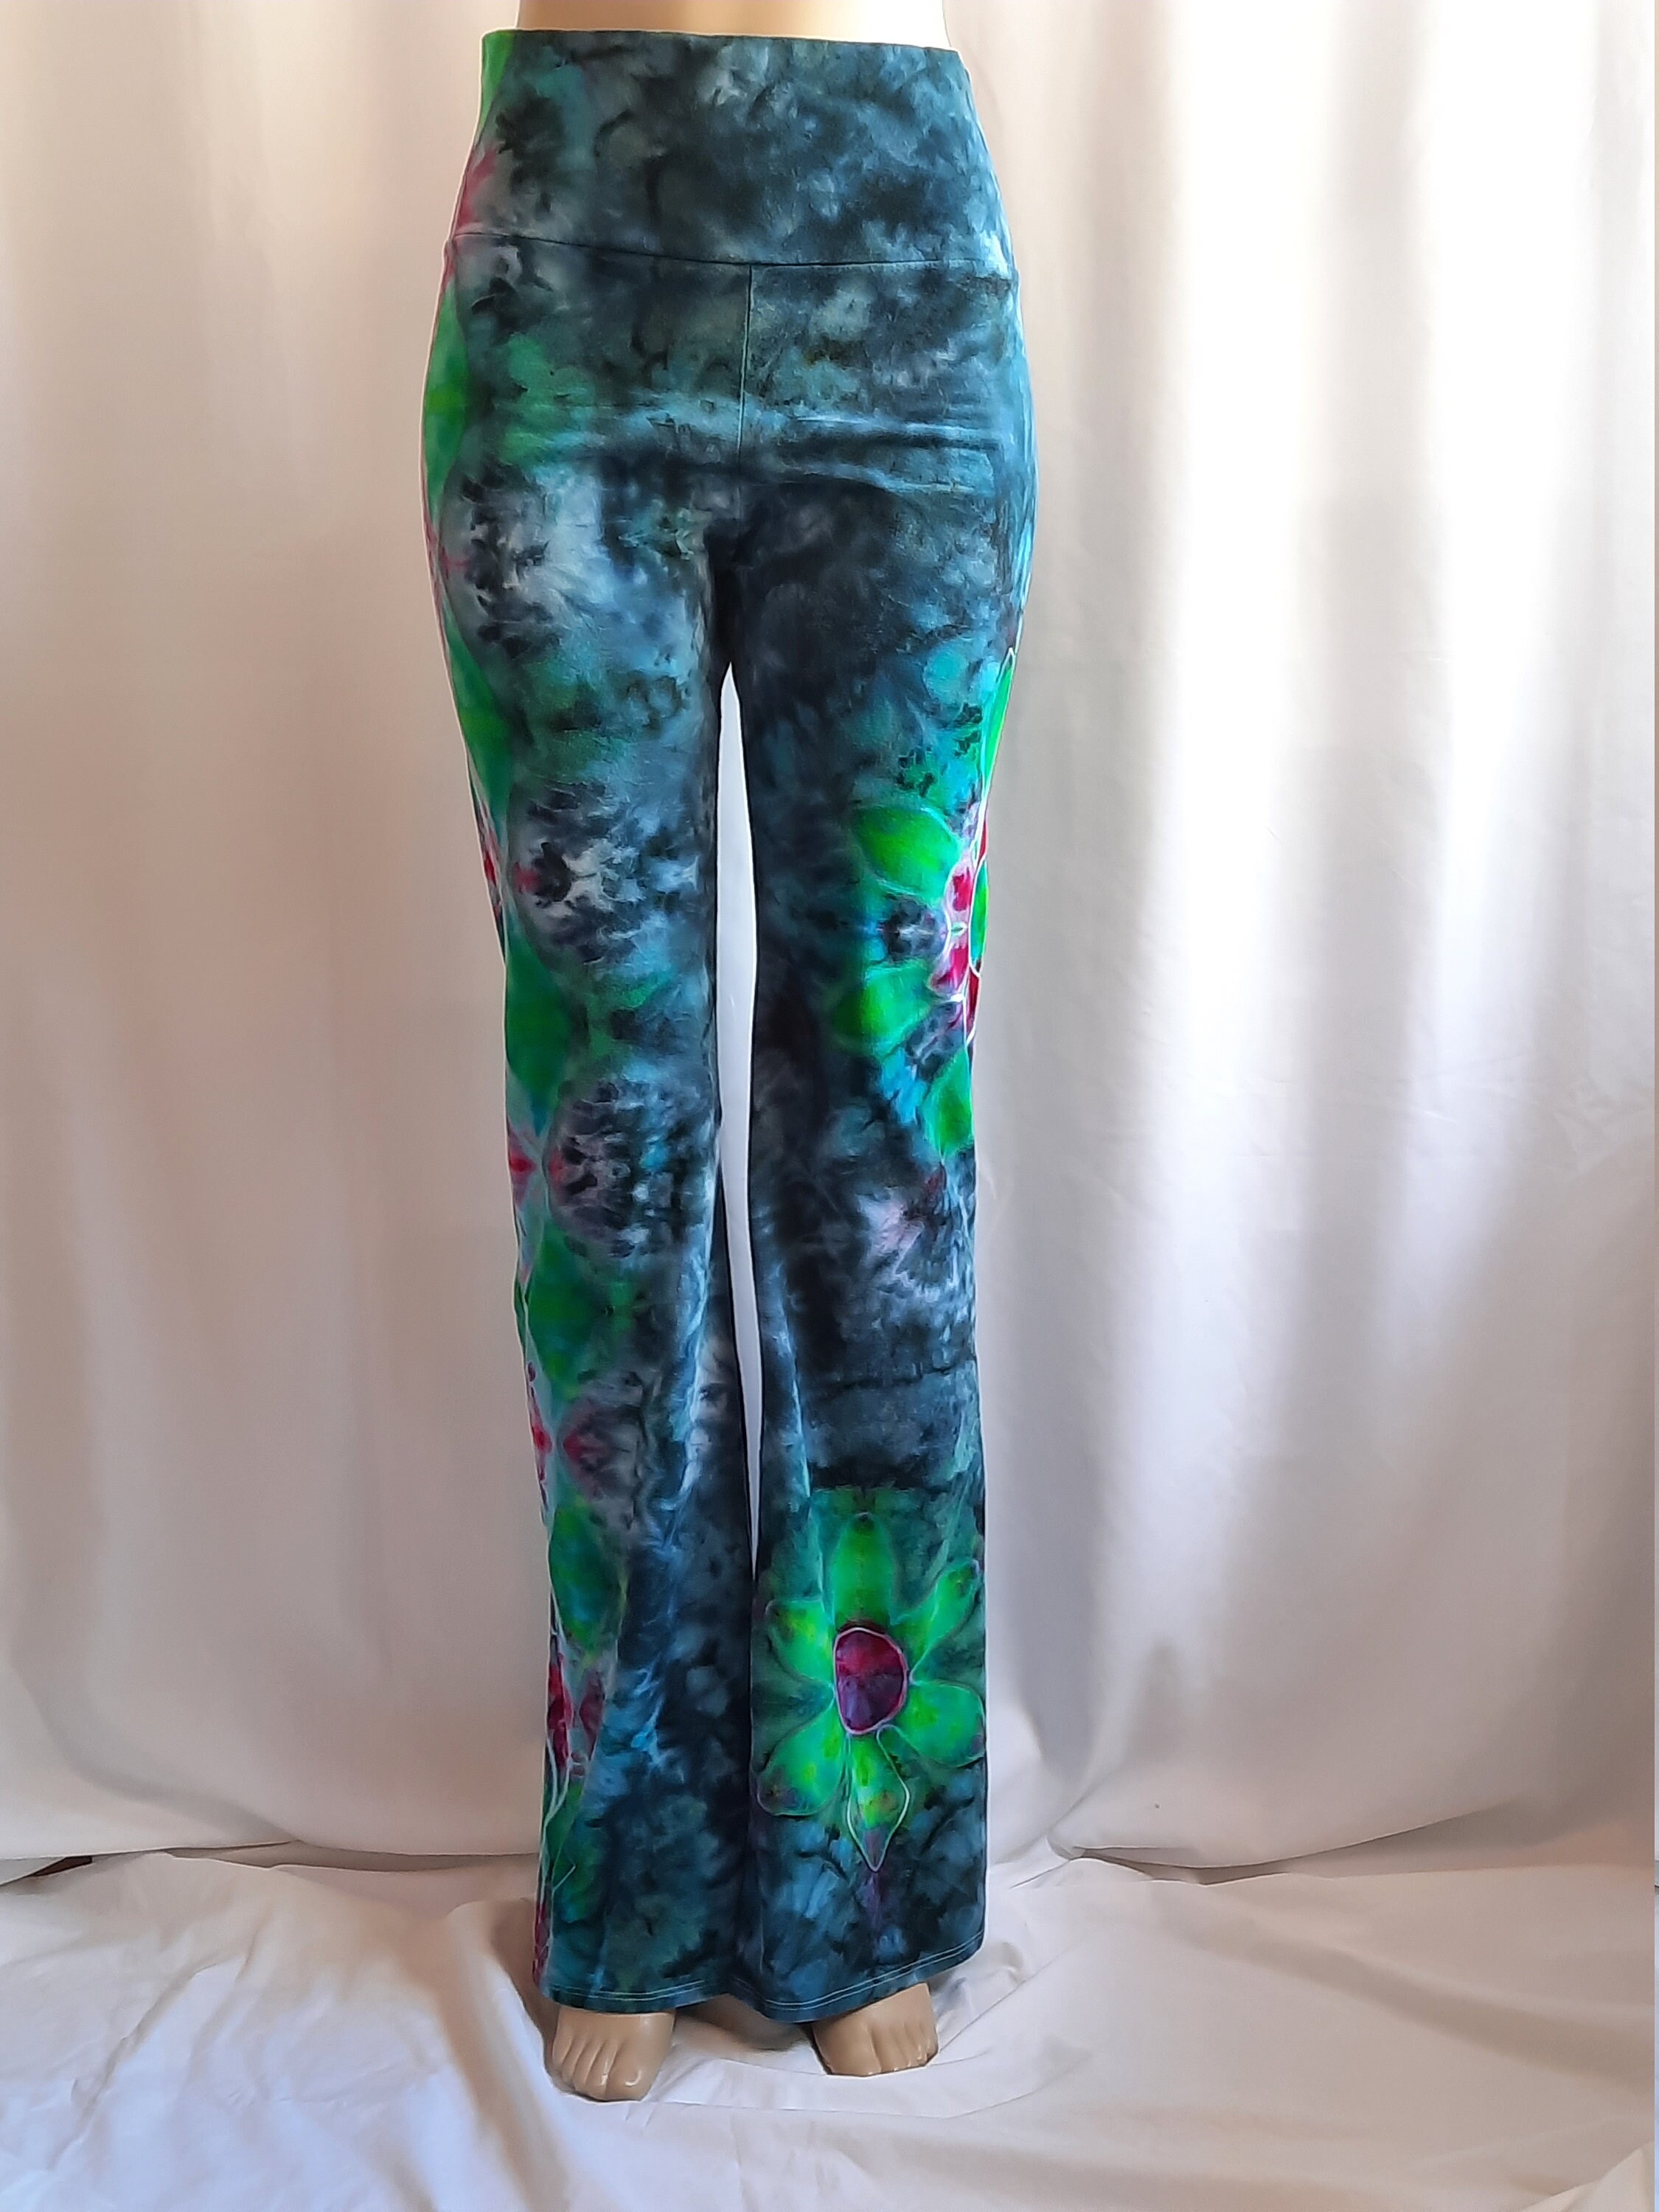 Size XLarge Yoga Pants - Ice Dye - Flowers - Blue, Green & Pink